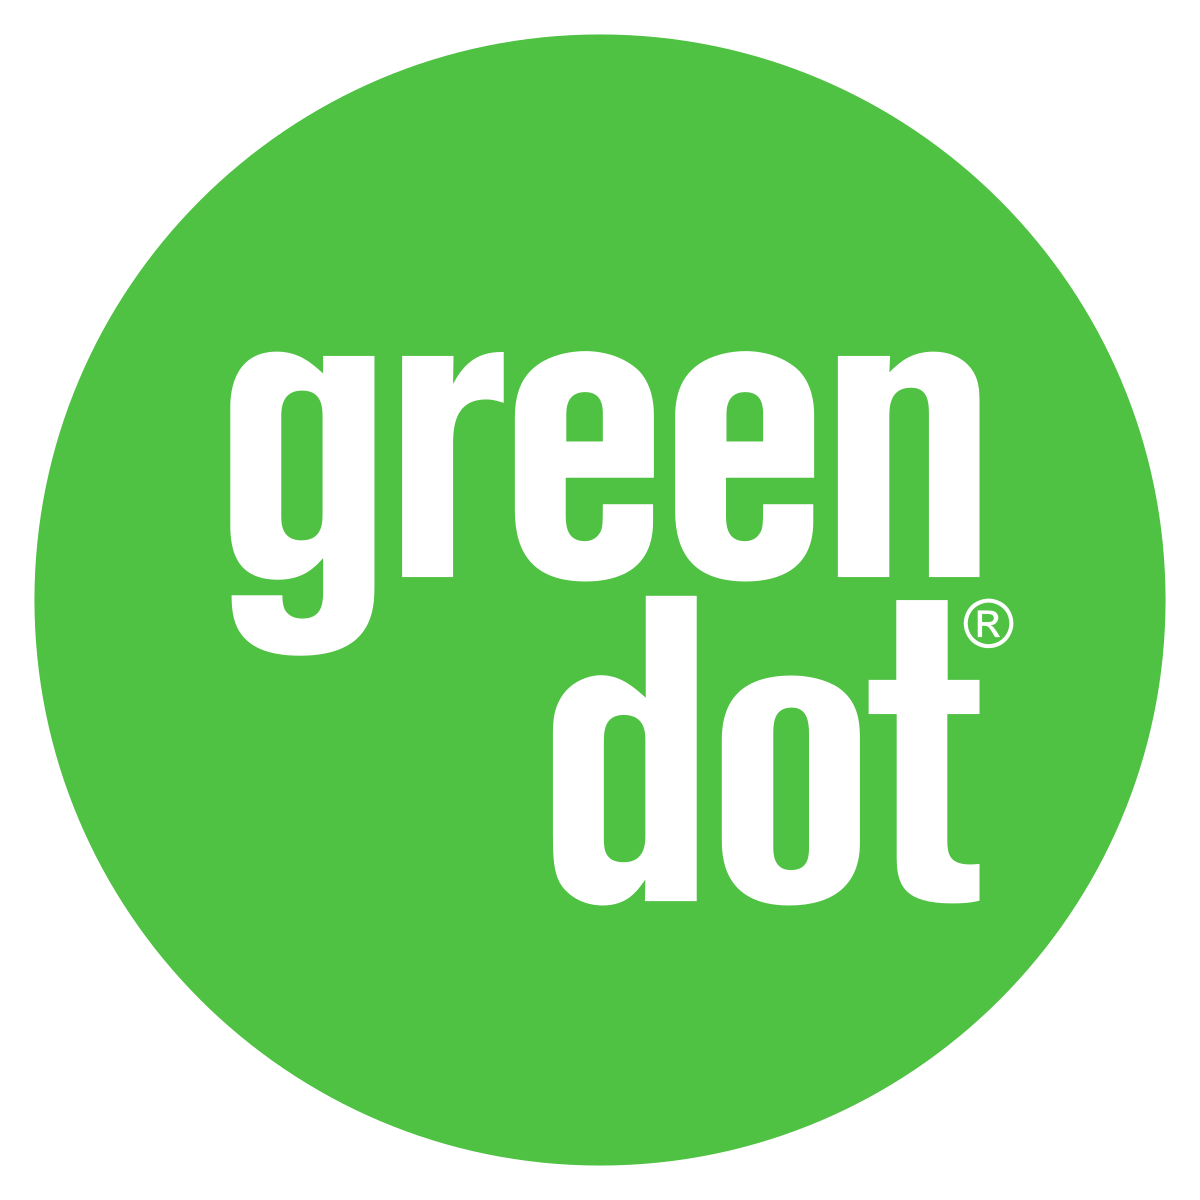 Green Dot logo green circle with text